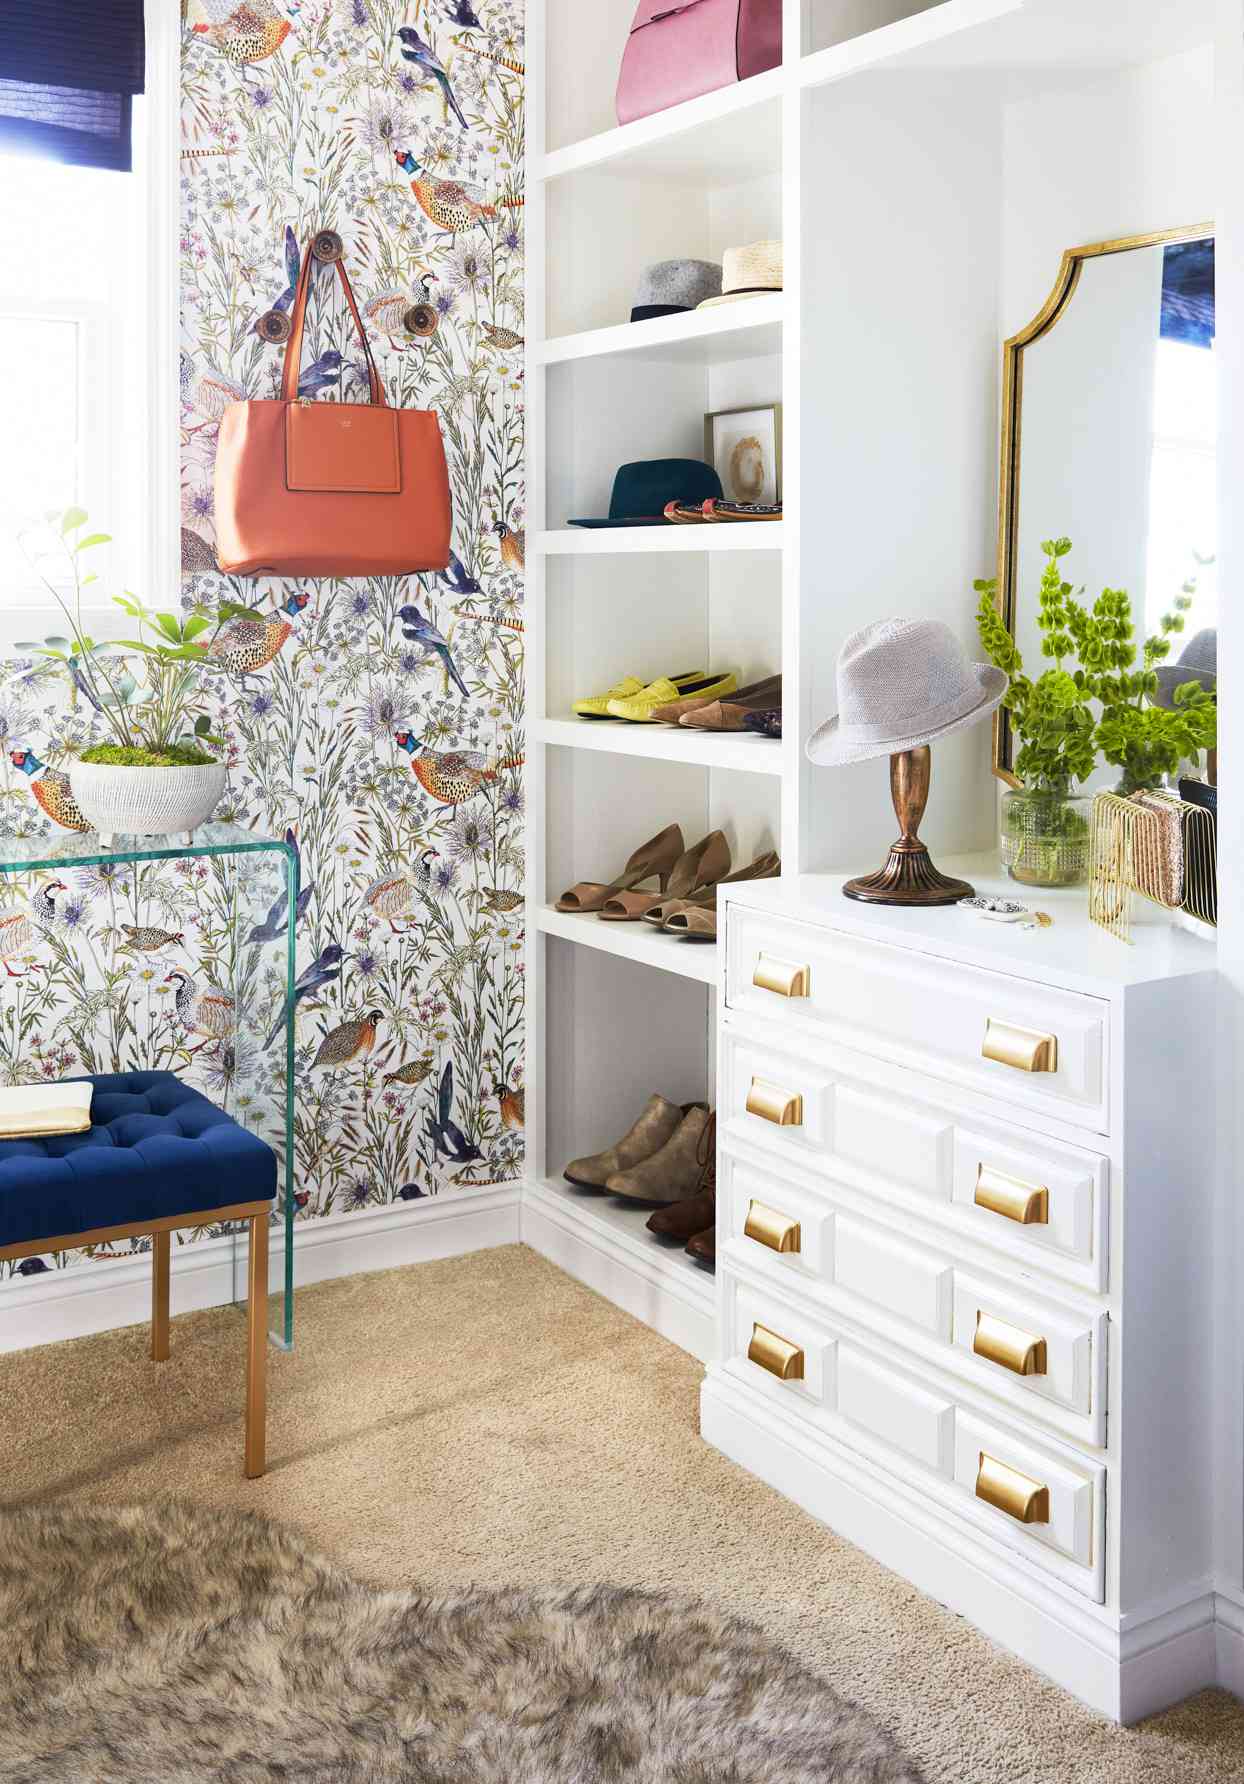 wallpapered closet with shoe shelf and dresser